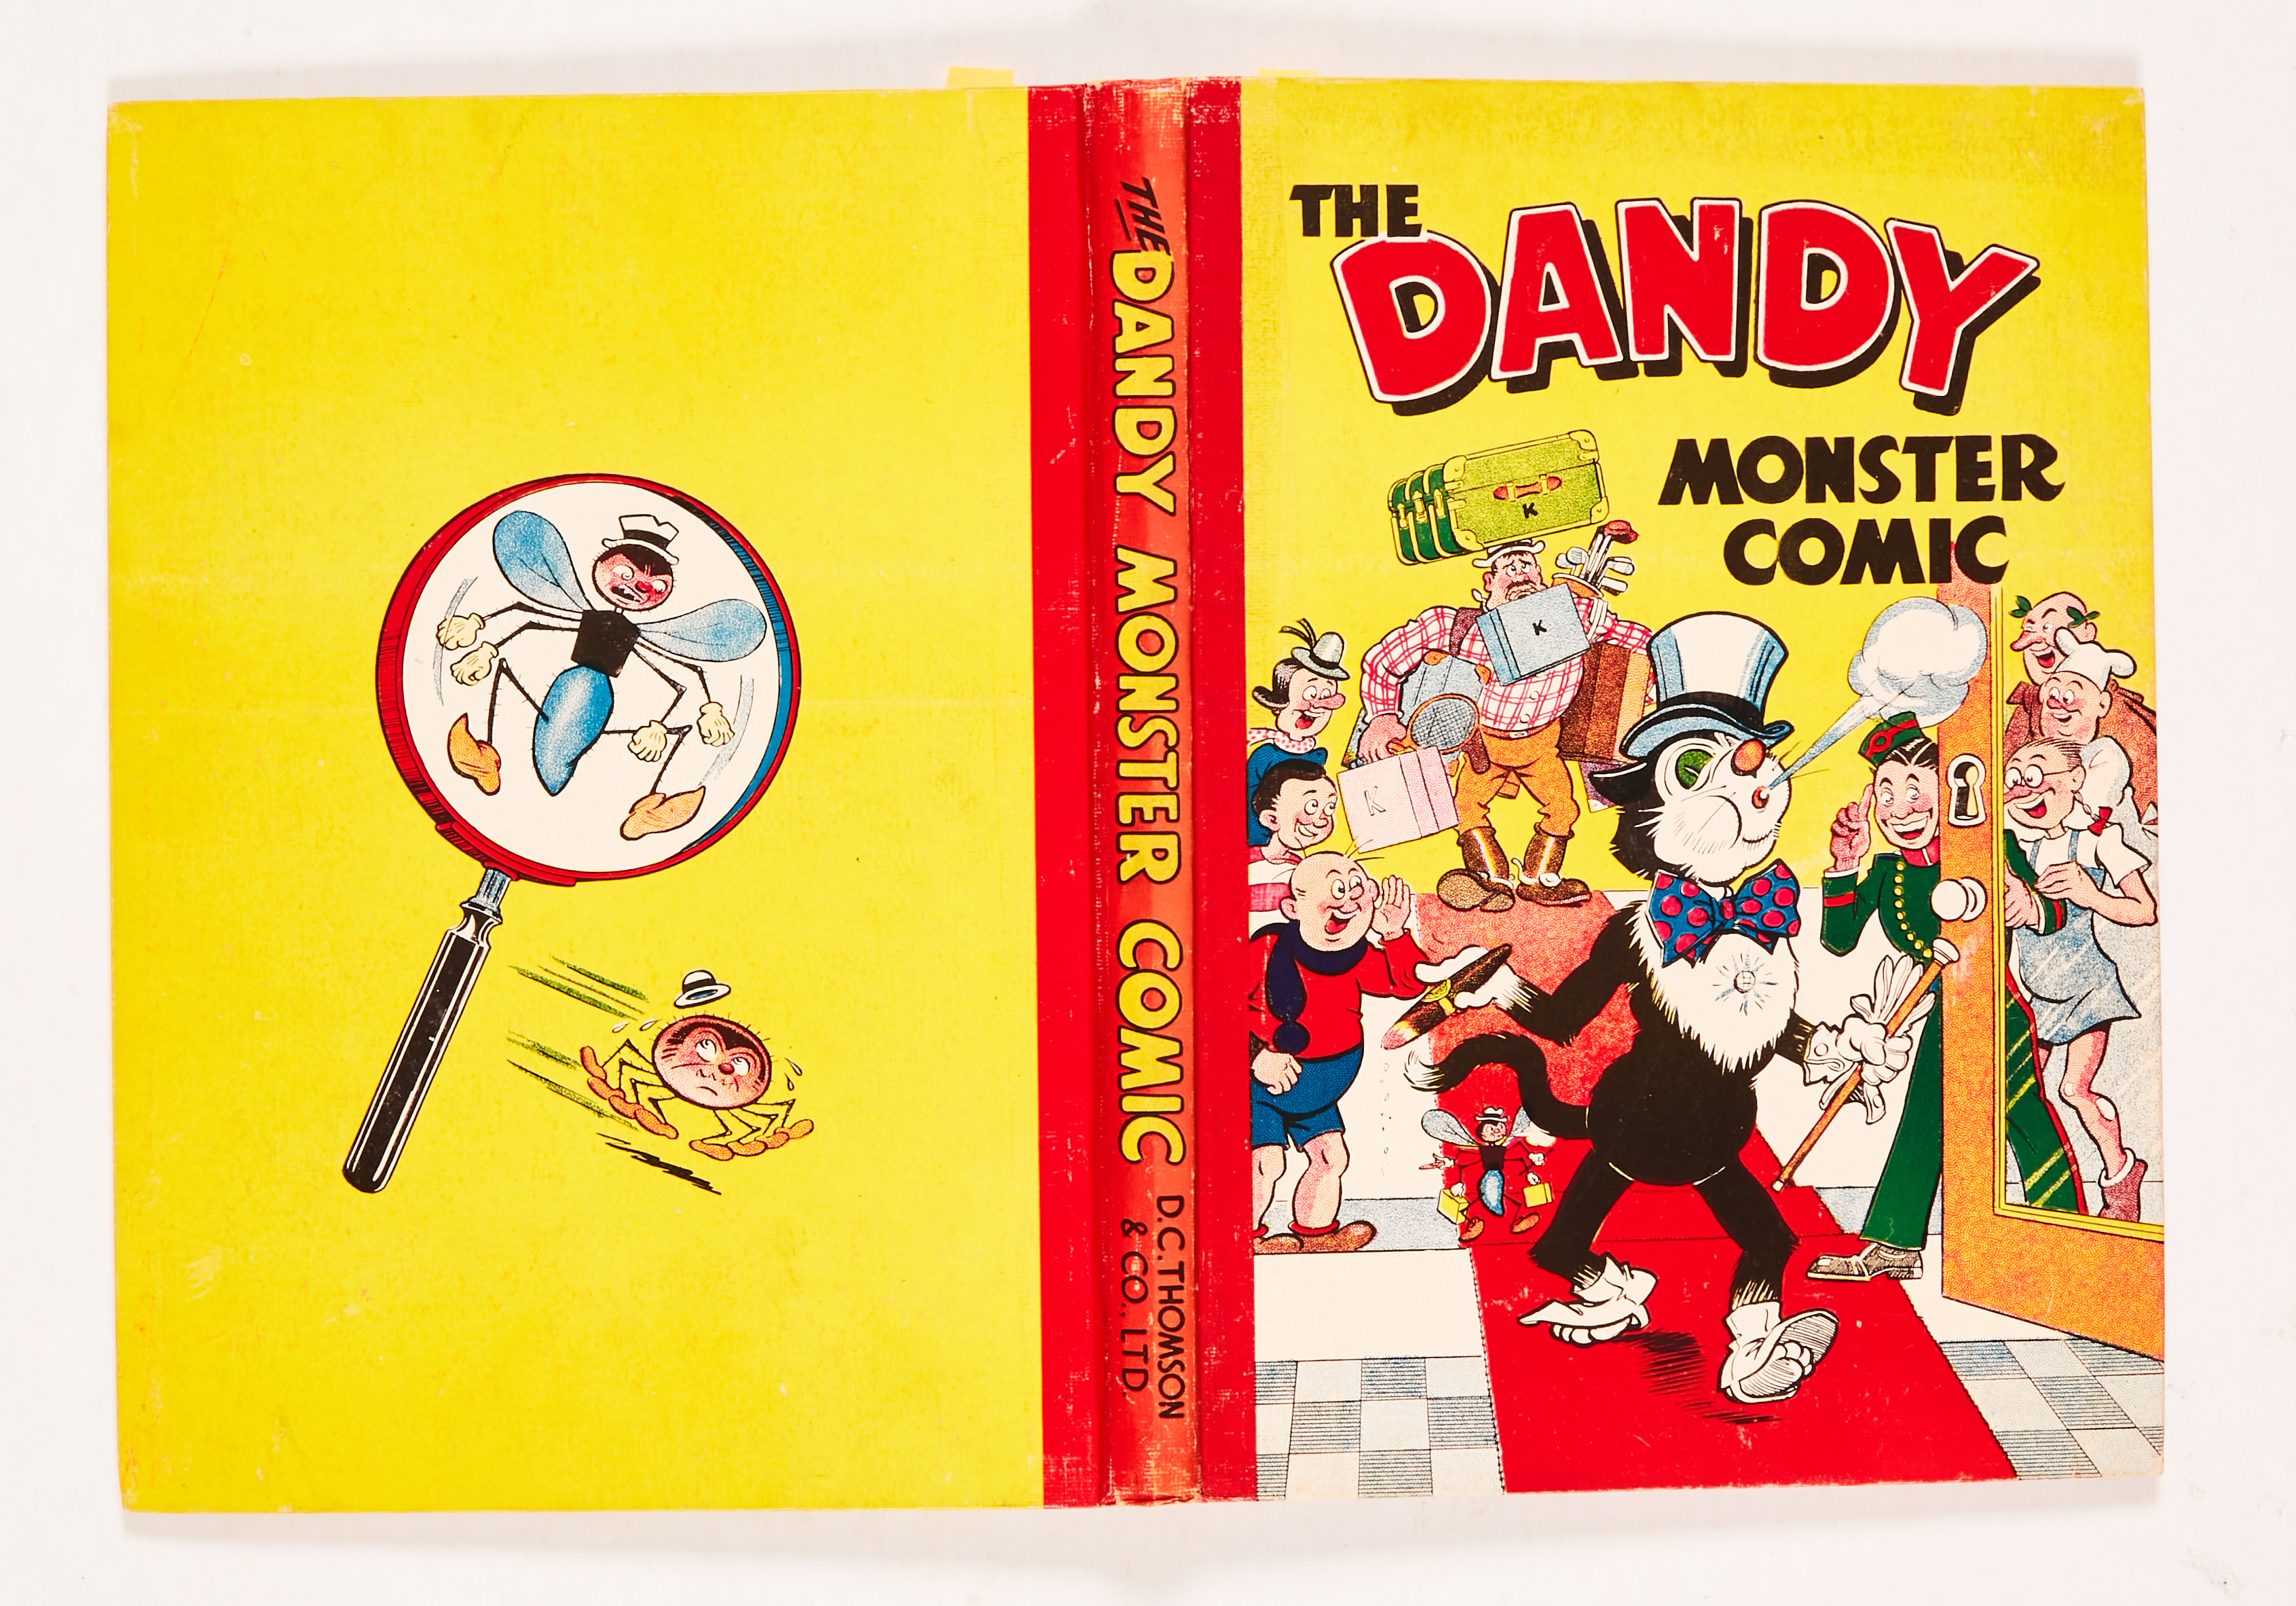 Dandy Monster Comic (1949). Korky the Toff, Dan the Bag Man! From the Brenda Butler Archive.